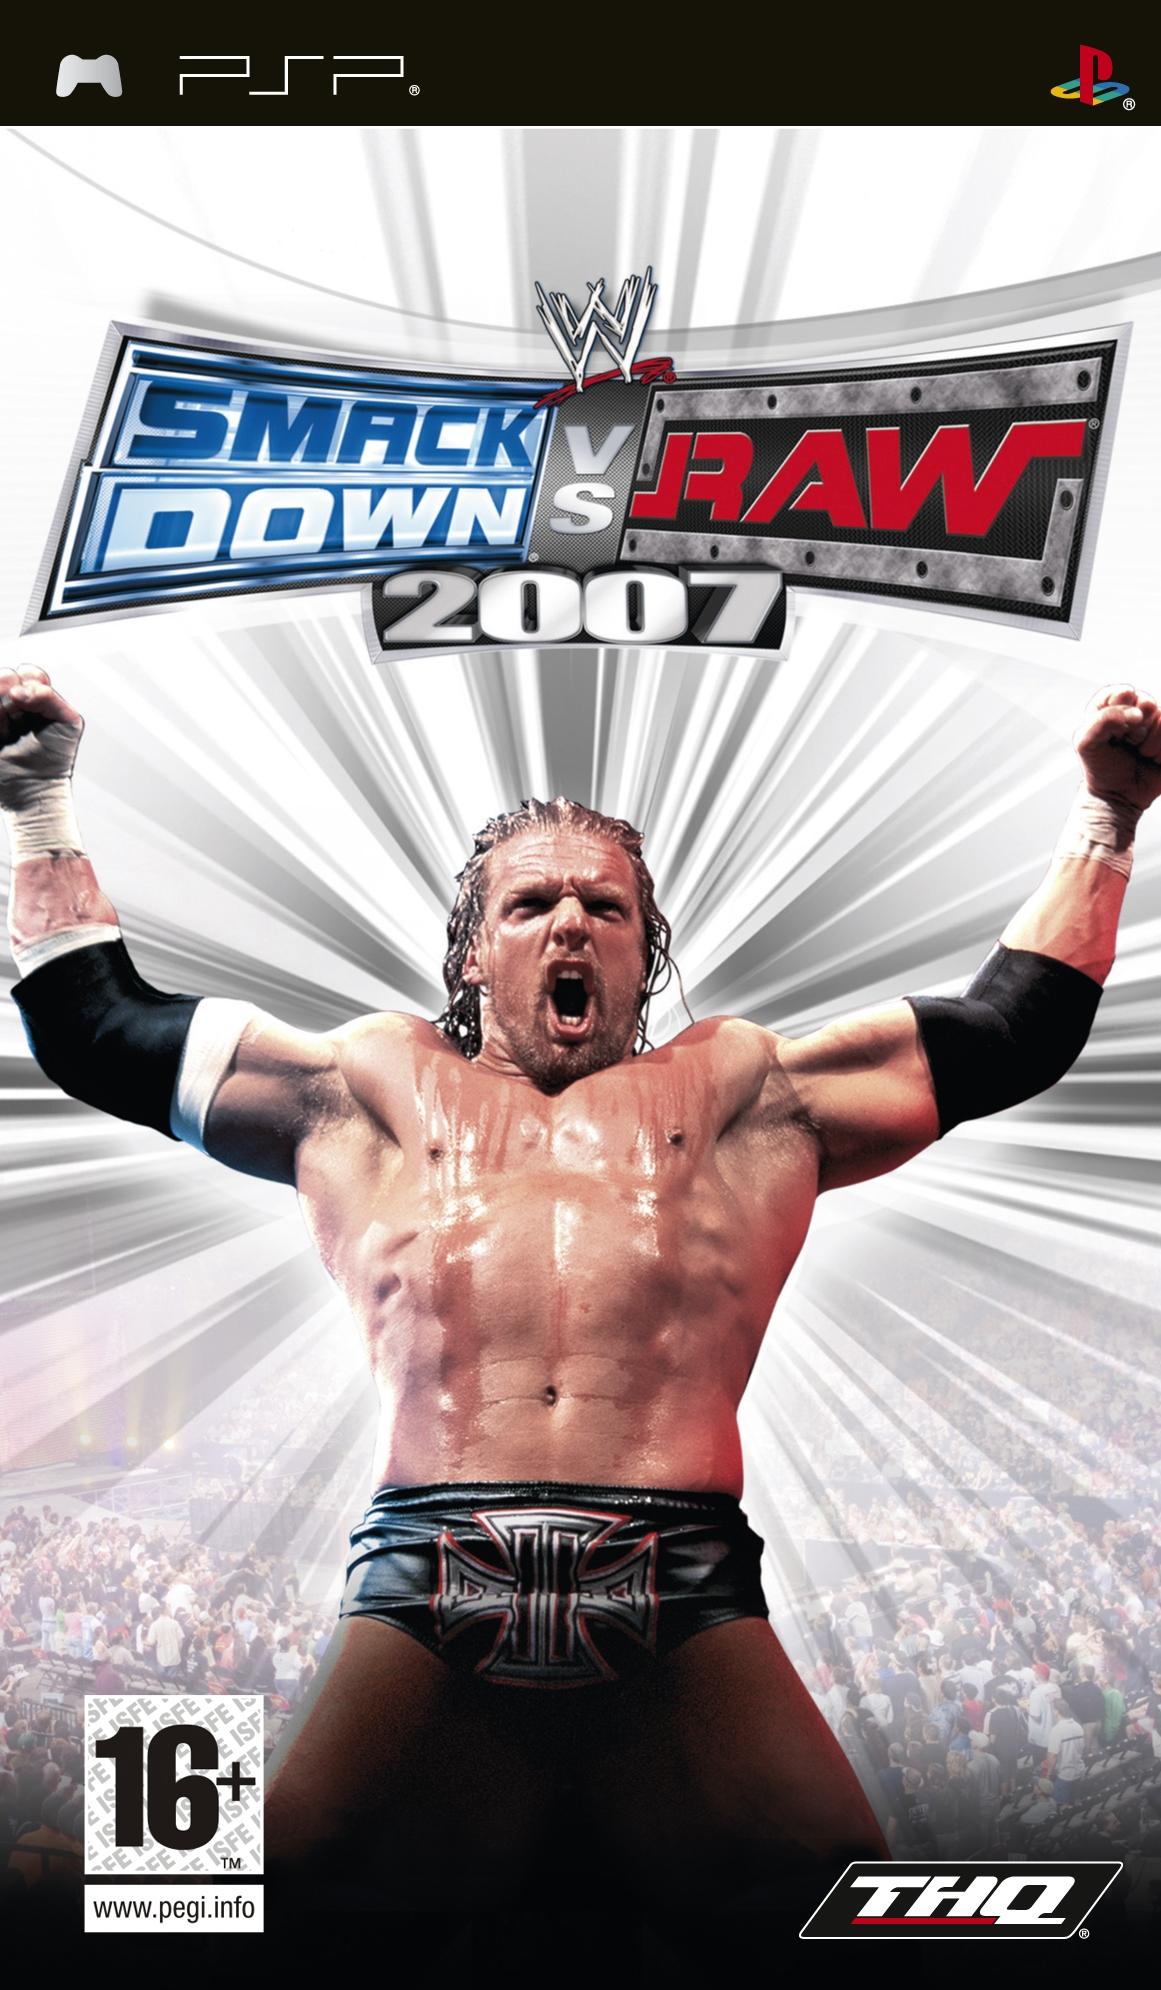 Game | Sony PSP | WWE SmackDown Vs. Raw 2007